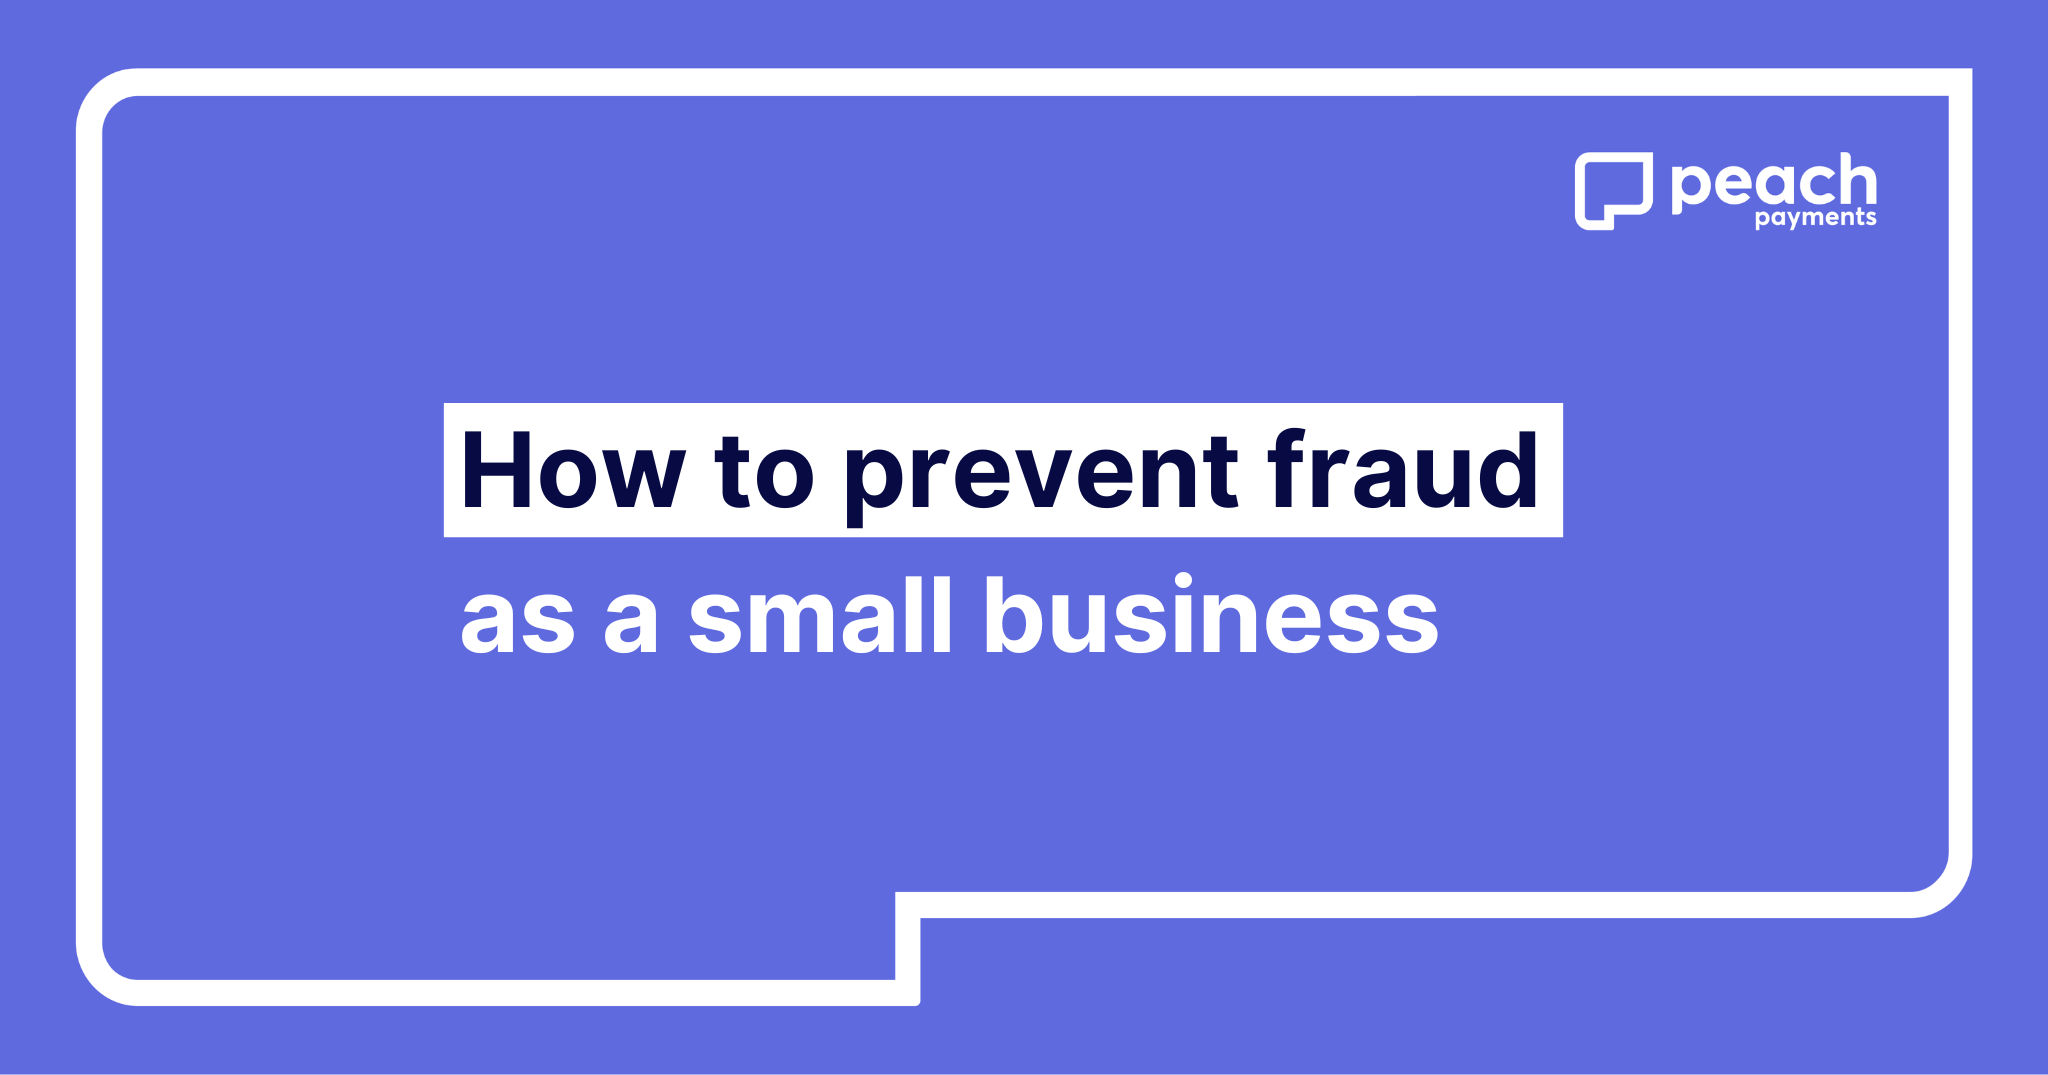 How to prevent fraud as an SME